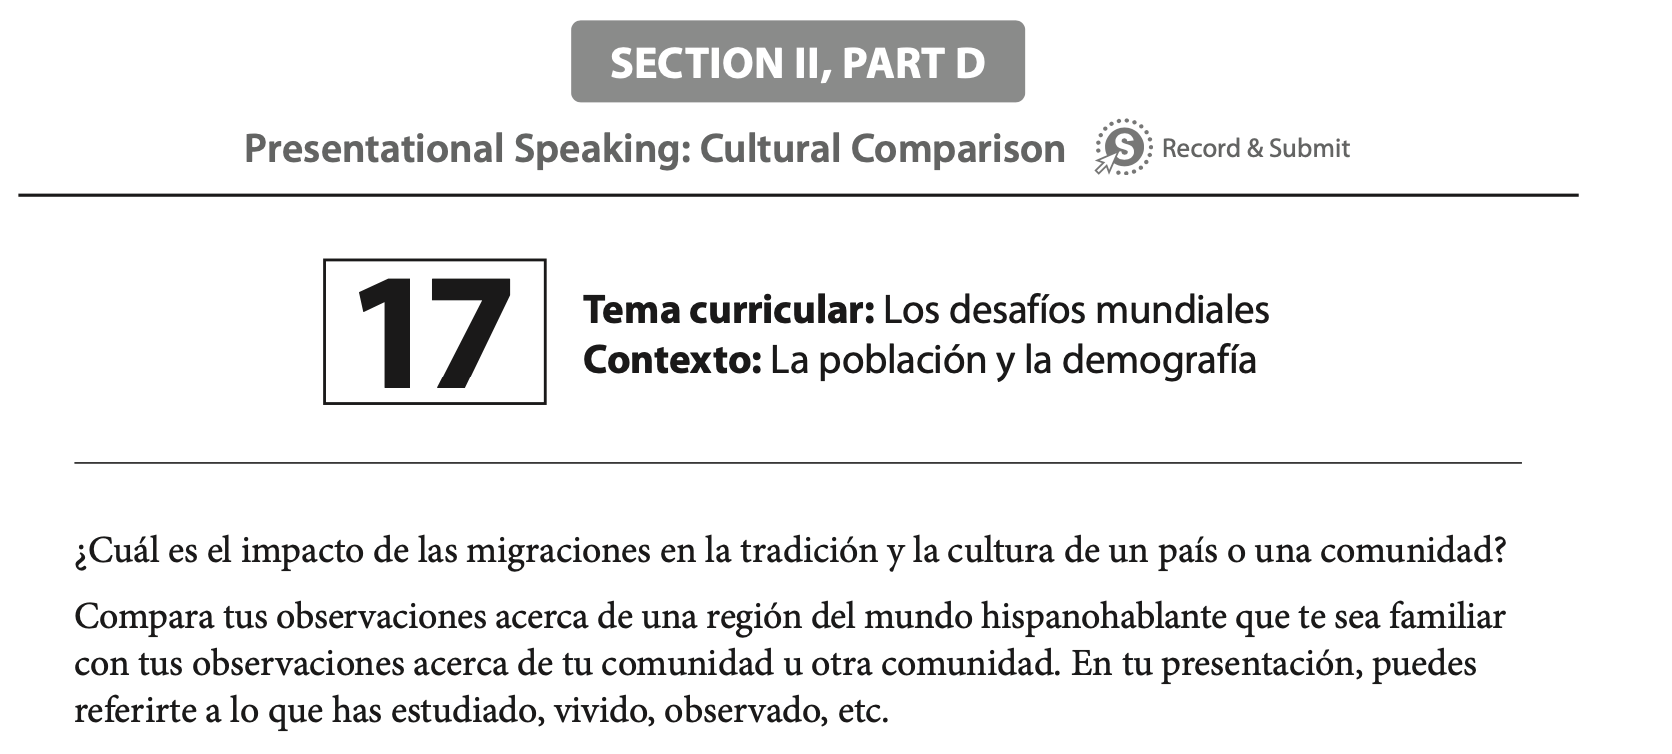 Presentational Speaking: Cultural Comparison